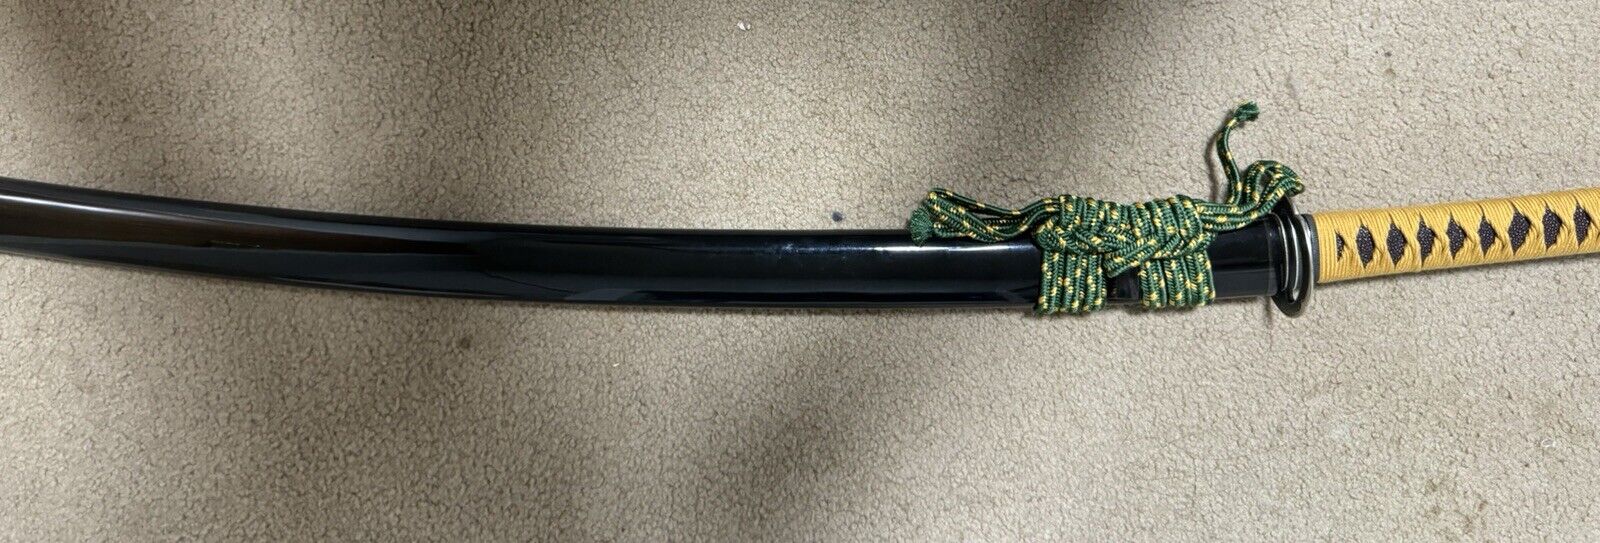 Japanese Handmade Samurai Katana Sword ⚠️READ DESCRIPTION FOR DETAILS⚠️